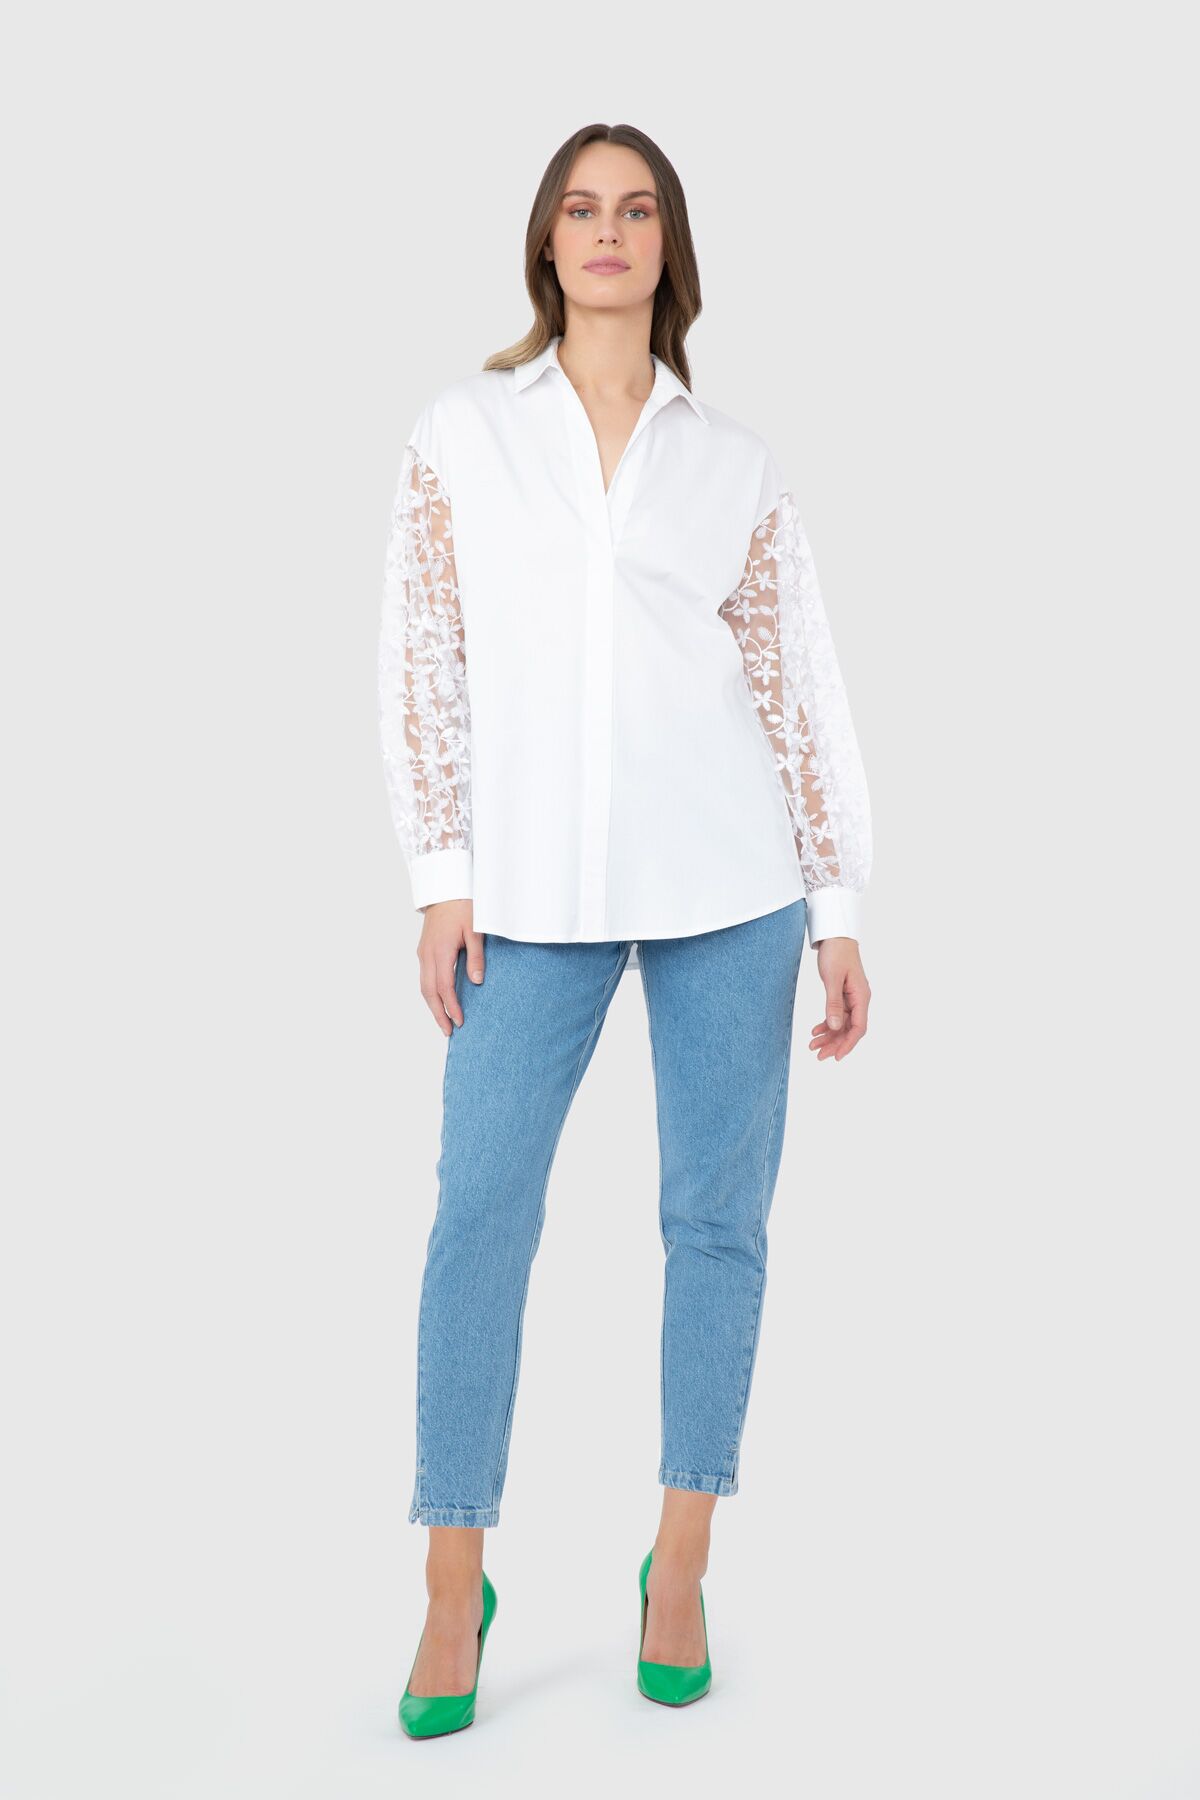 KIWE - White Shirt with Lace on the Sleeve